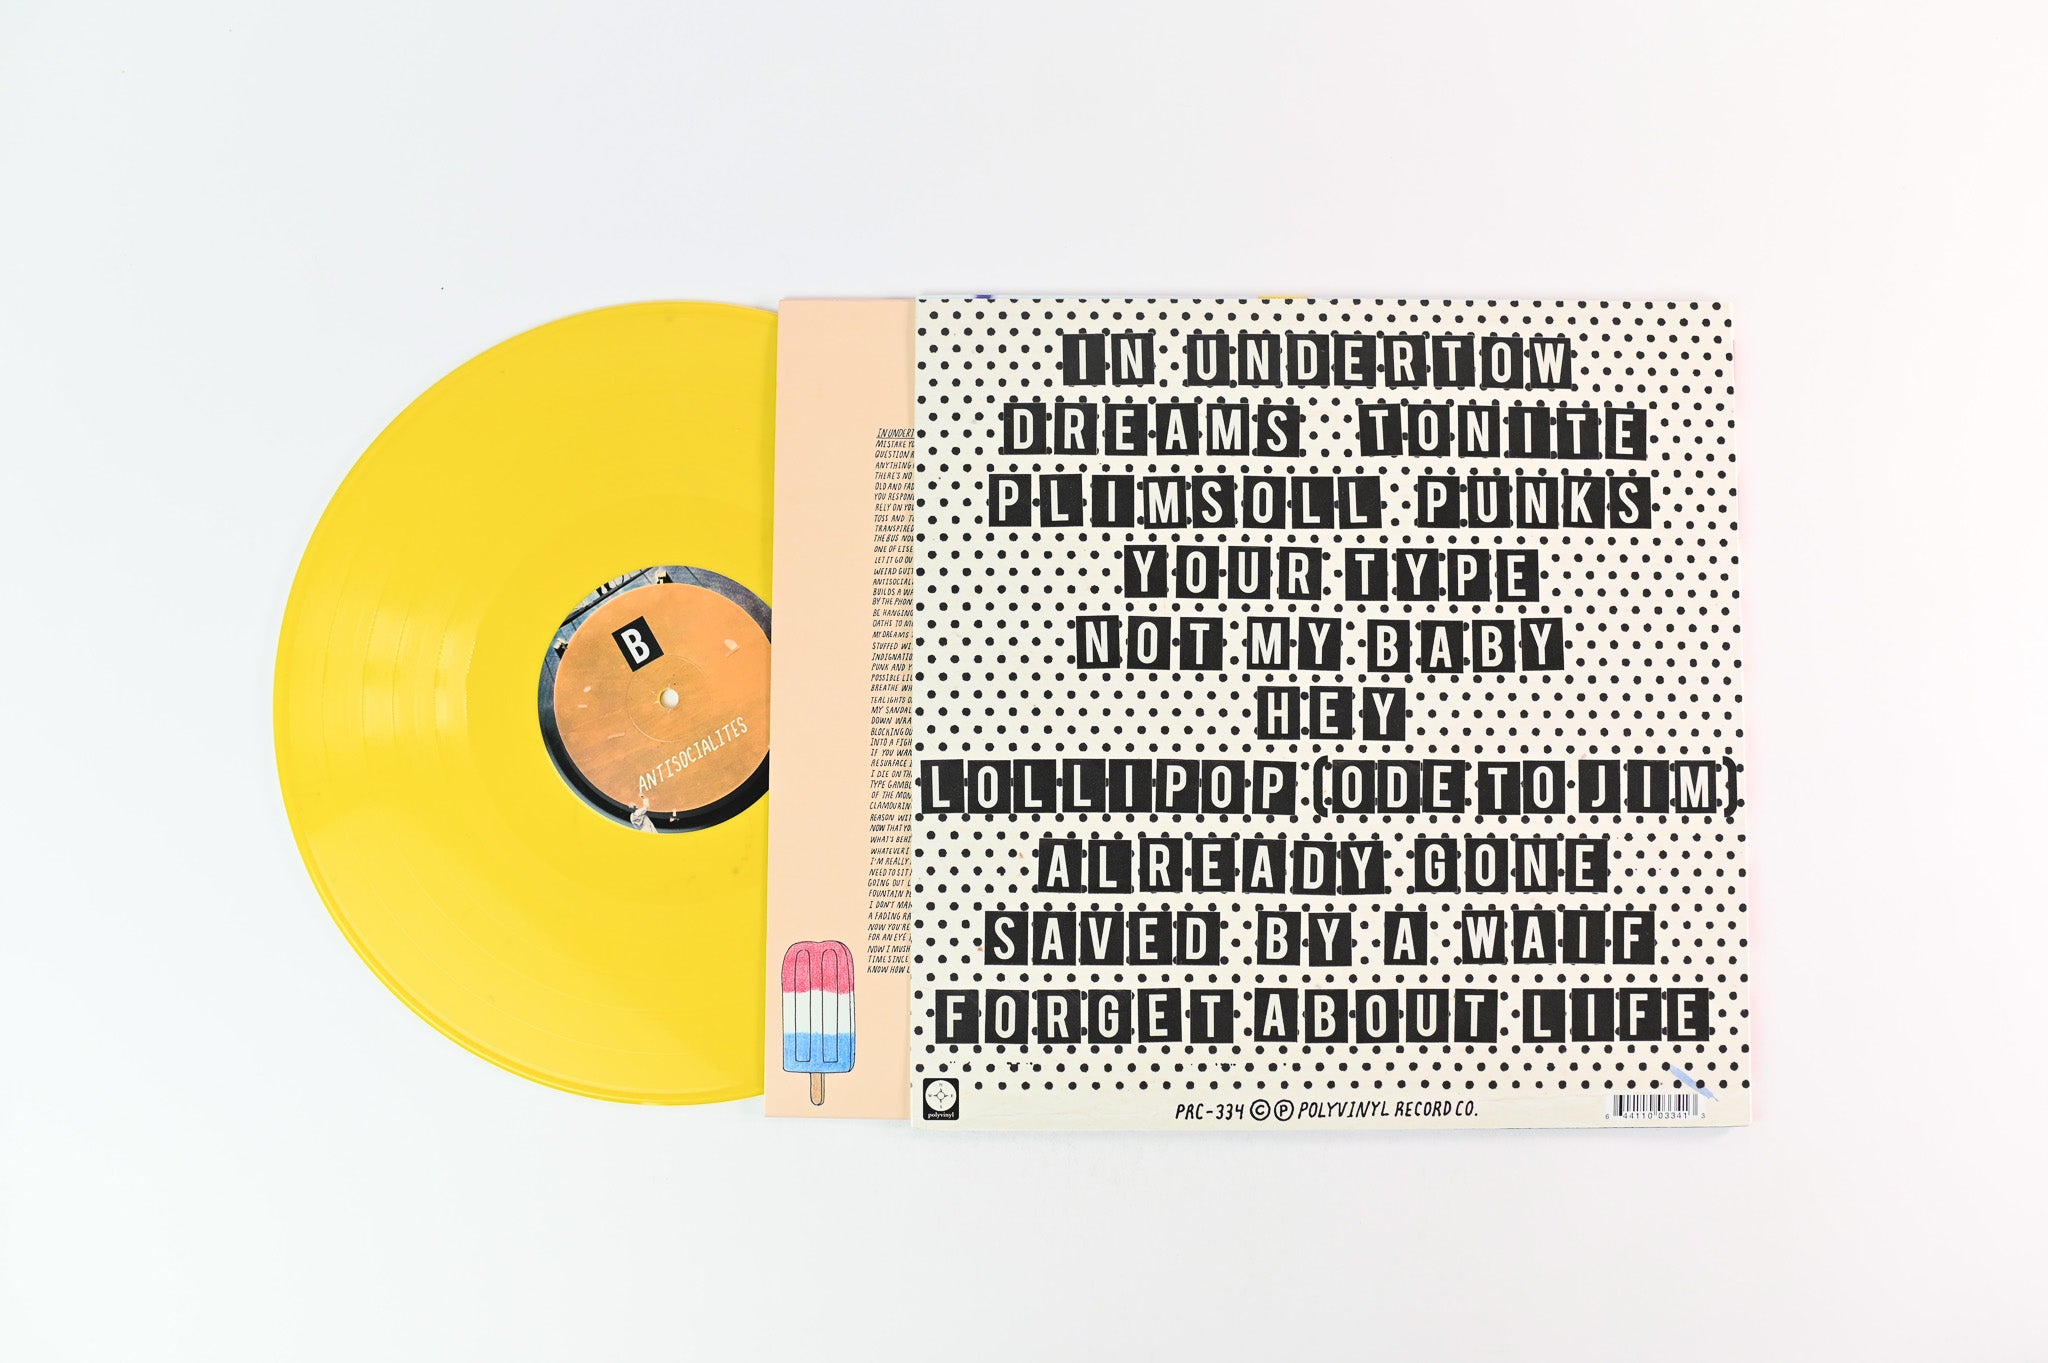 Alvvays - Antisocialites on Polyvinyl Yellow Vinyl Reissue